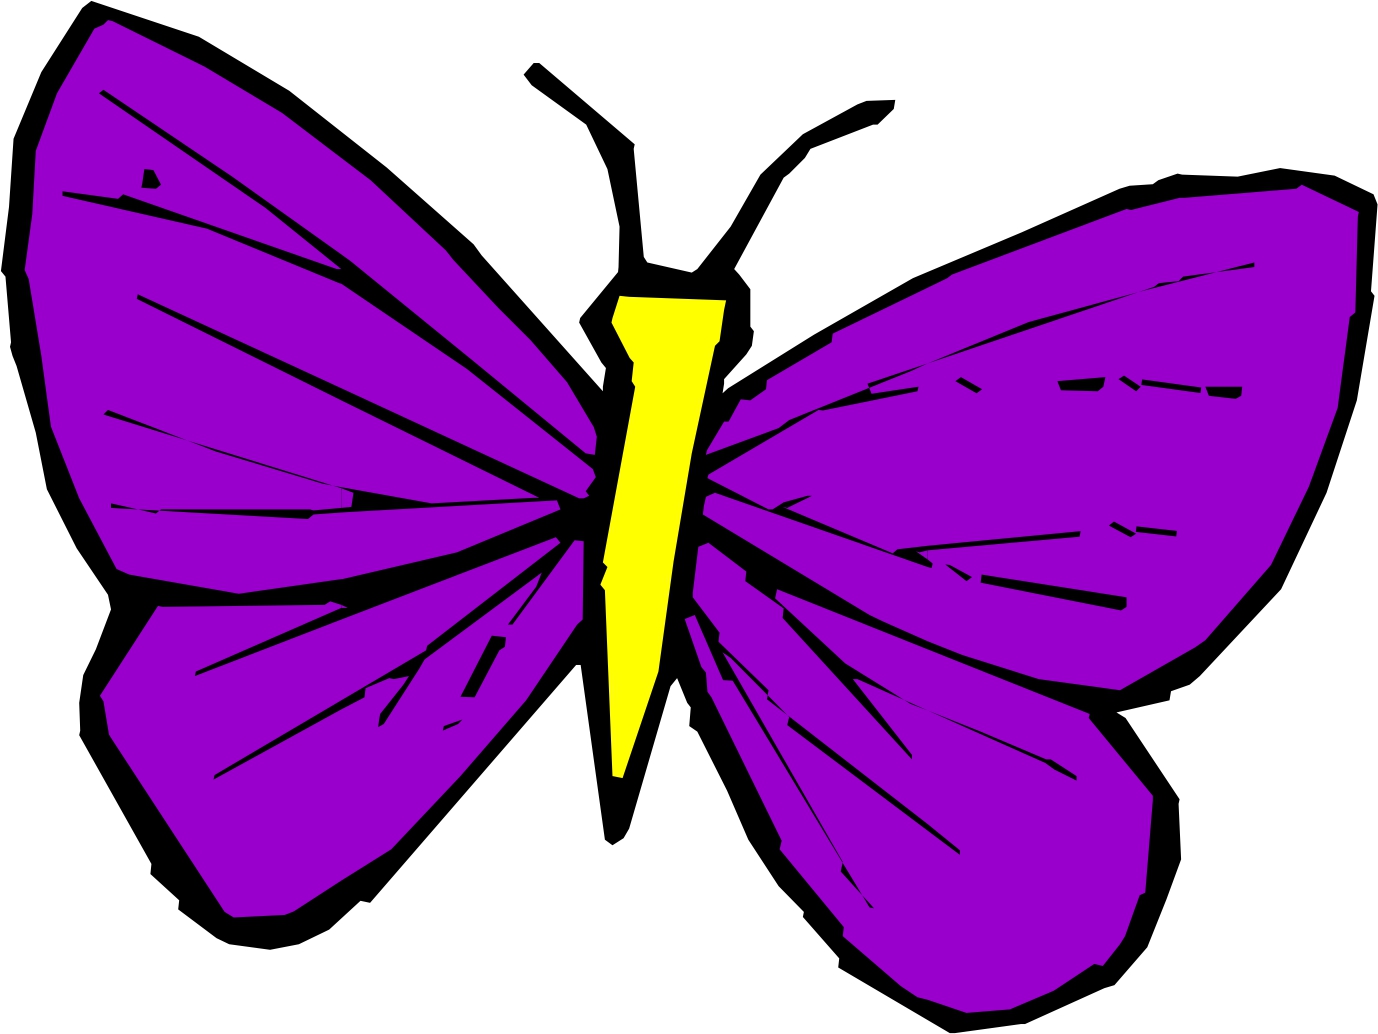 simple cartoon butterfly